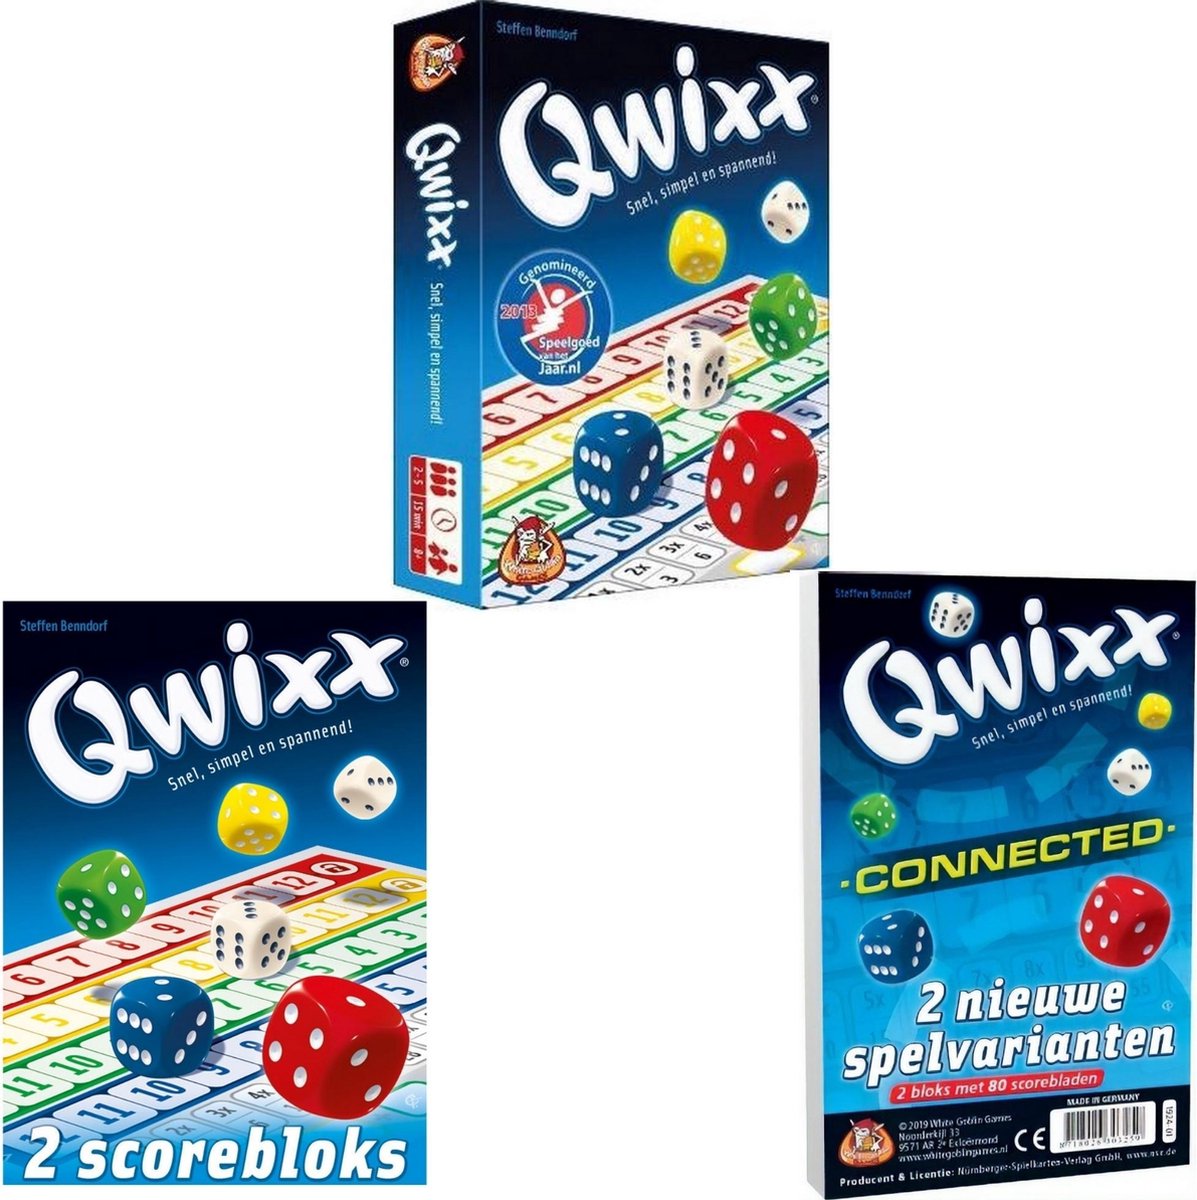 Dobbelspel Qwixx & 2 extra scoreblocks & Qwixx Connected